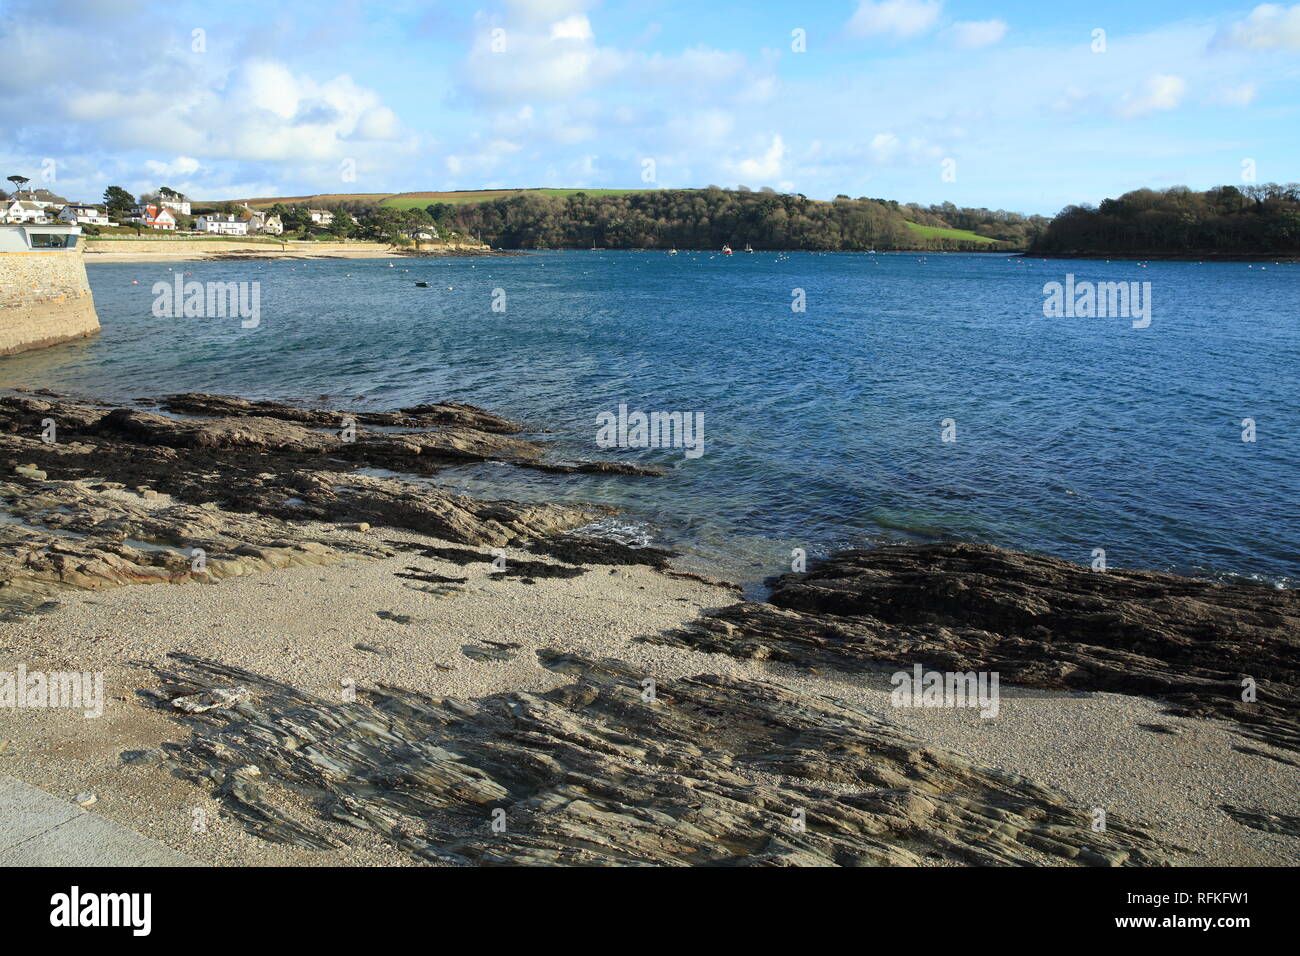 St Mawes waterfront, Roseland Peninsula, Cornwall, England, UK Banque D'Images